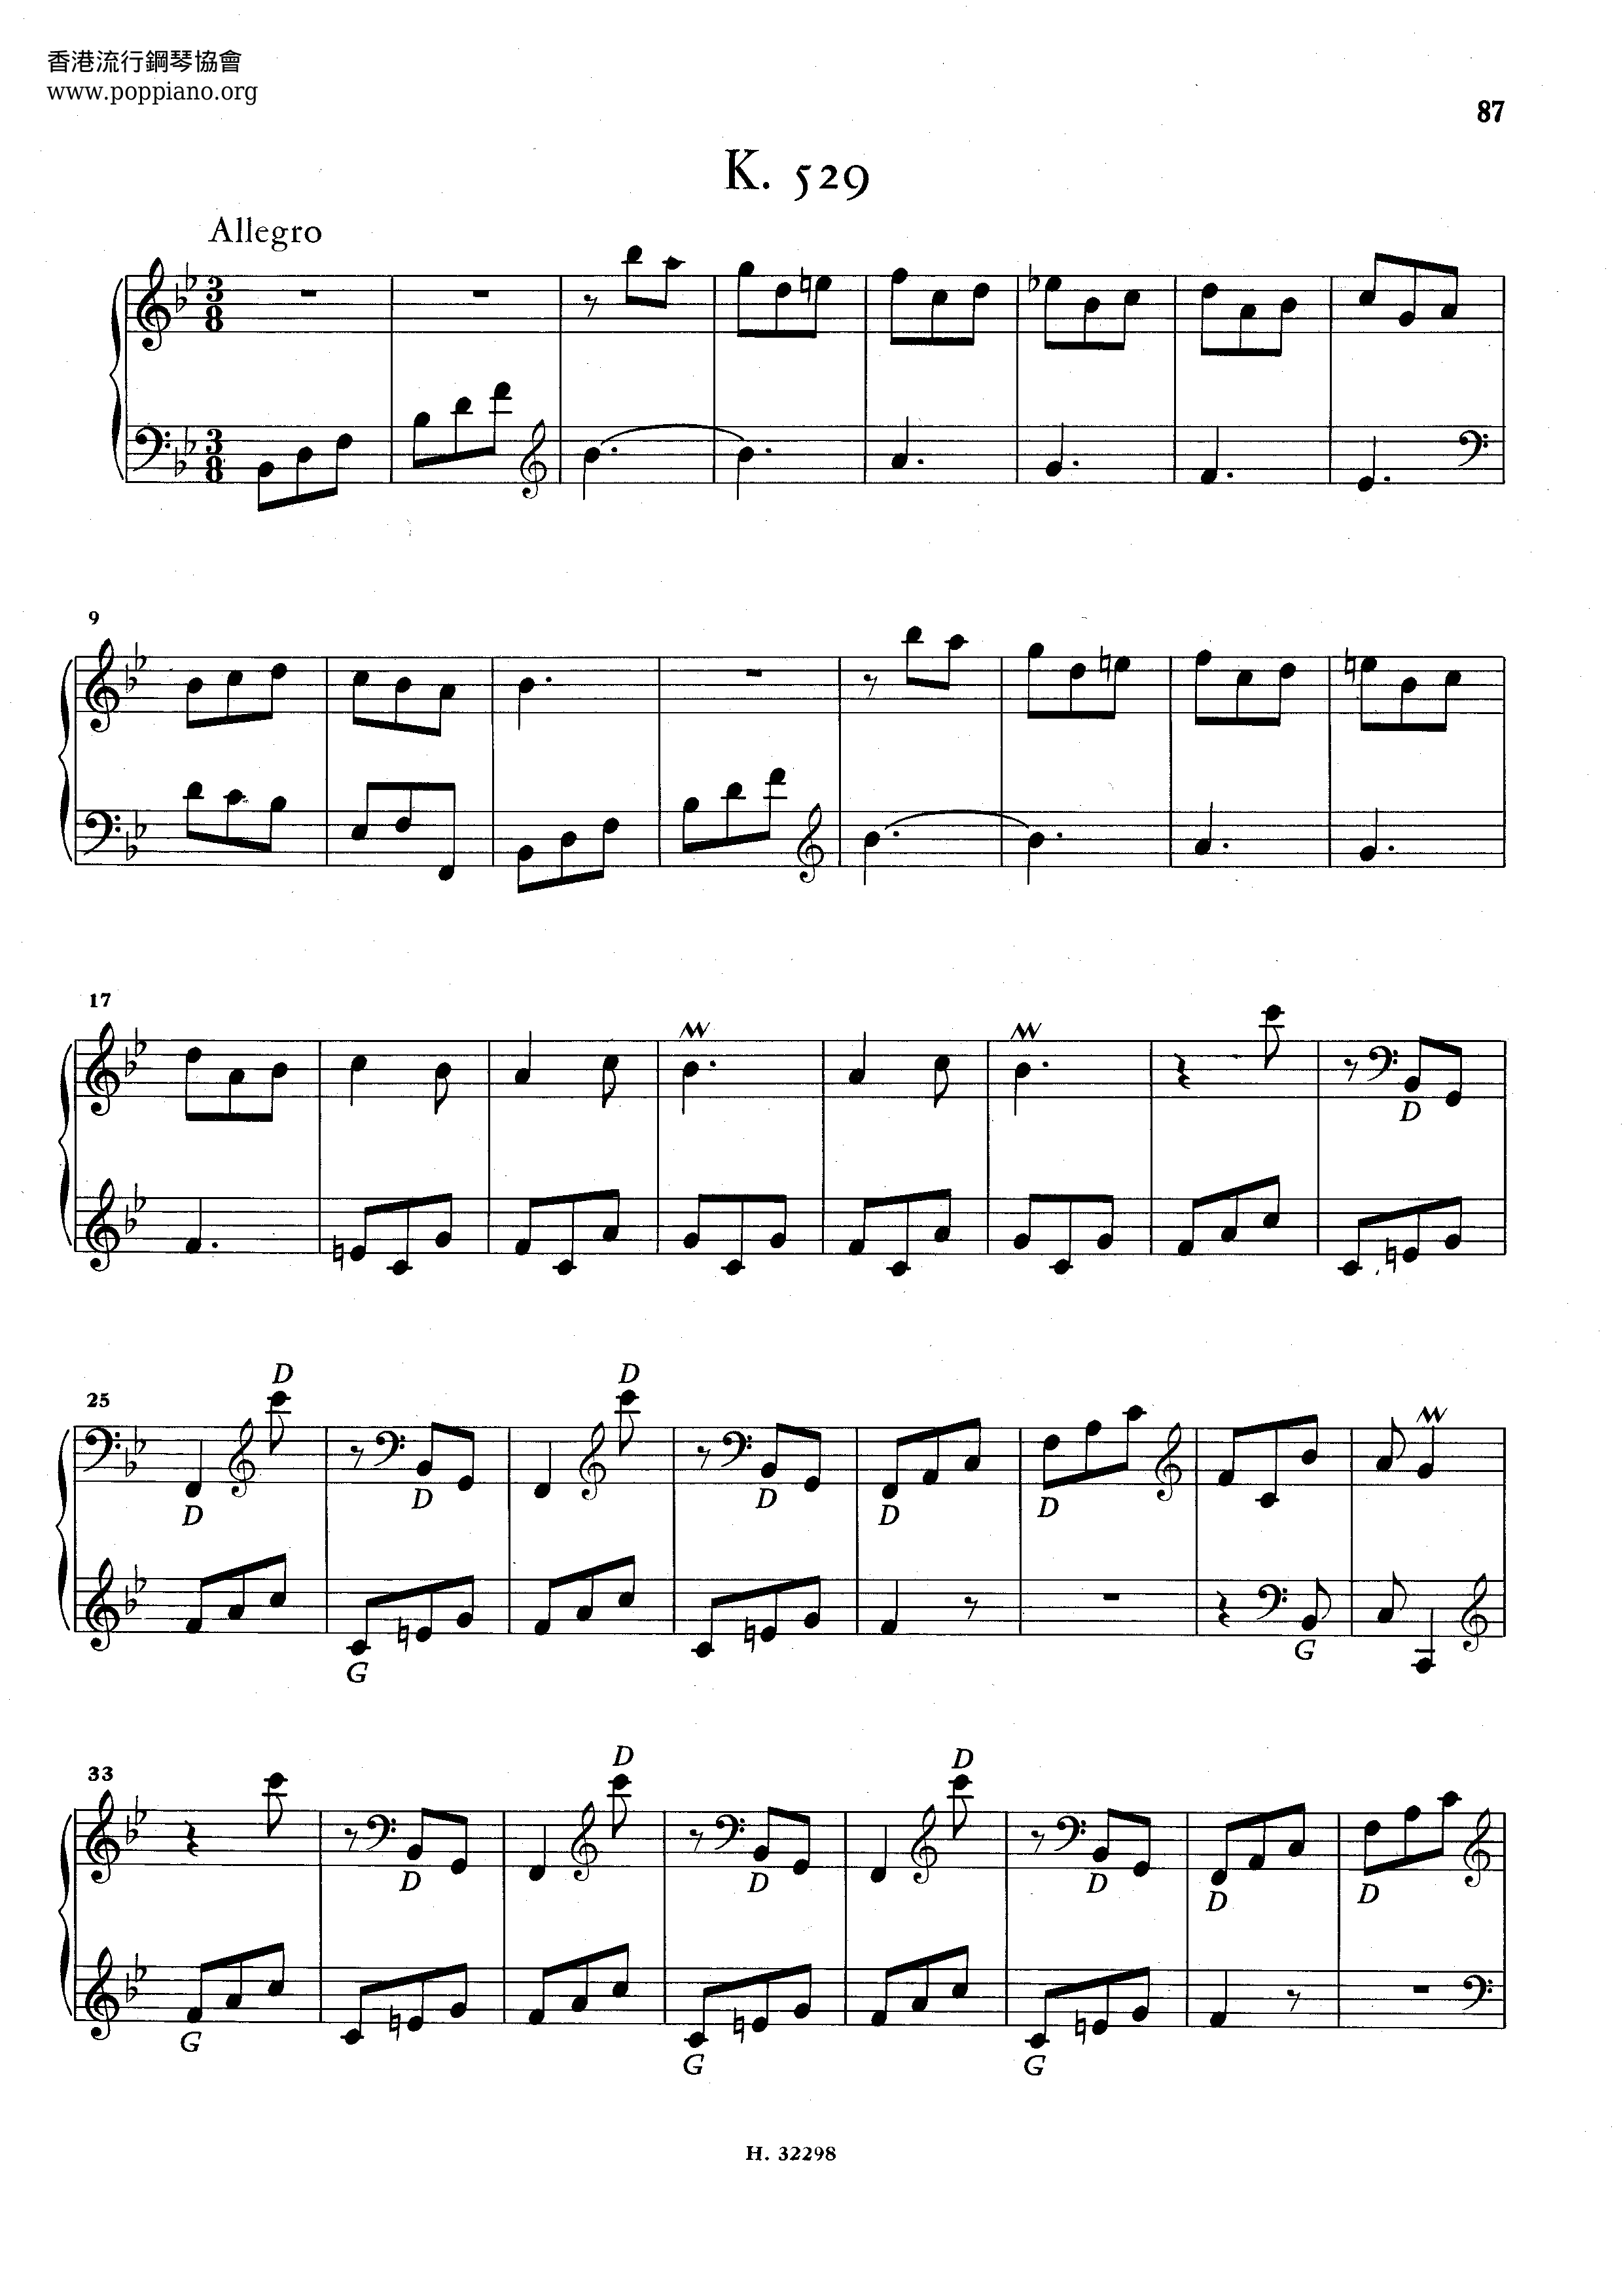 Scarlatti Piano Sonata K.529ピアノ譜